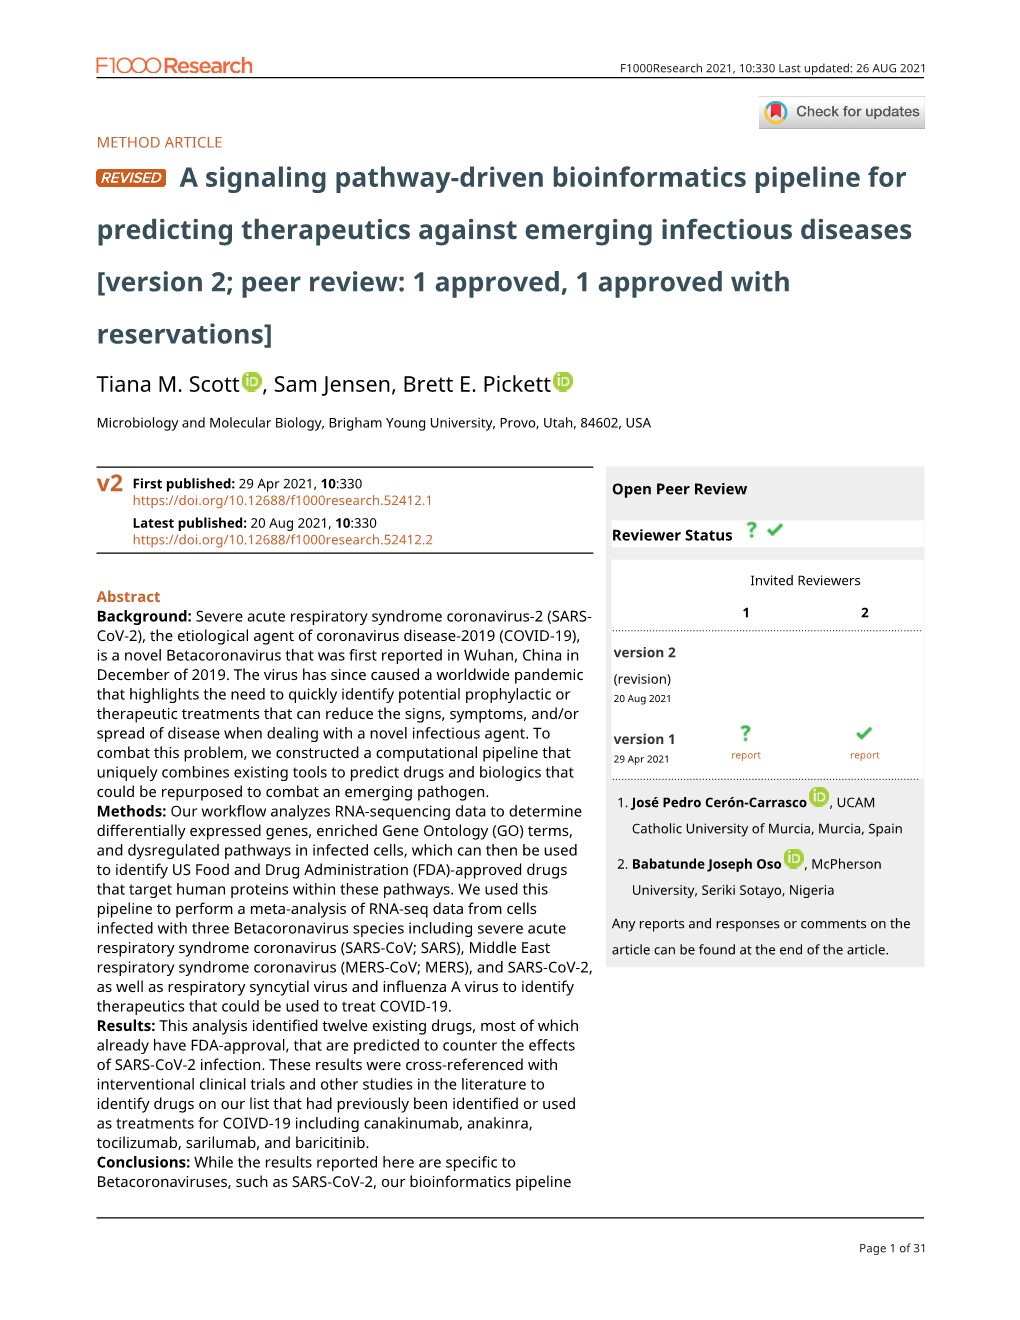 A Signaling Pathway-Driven Bioinformatics